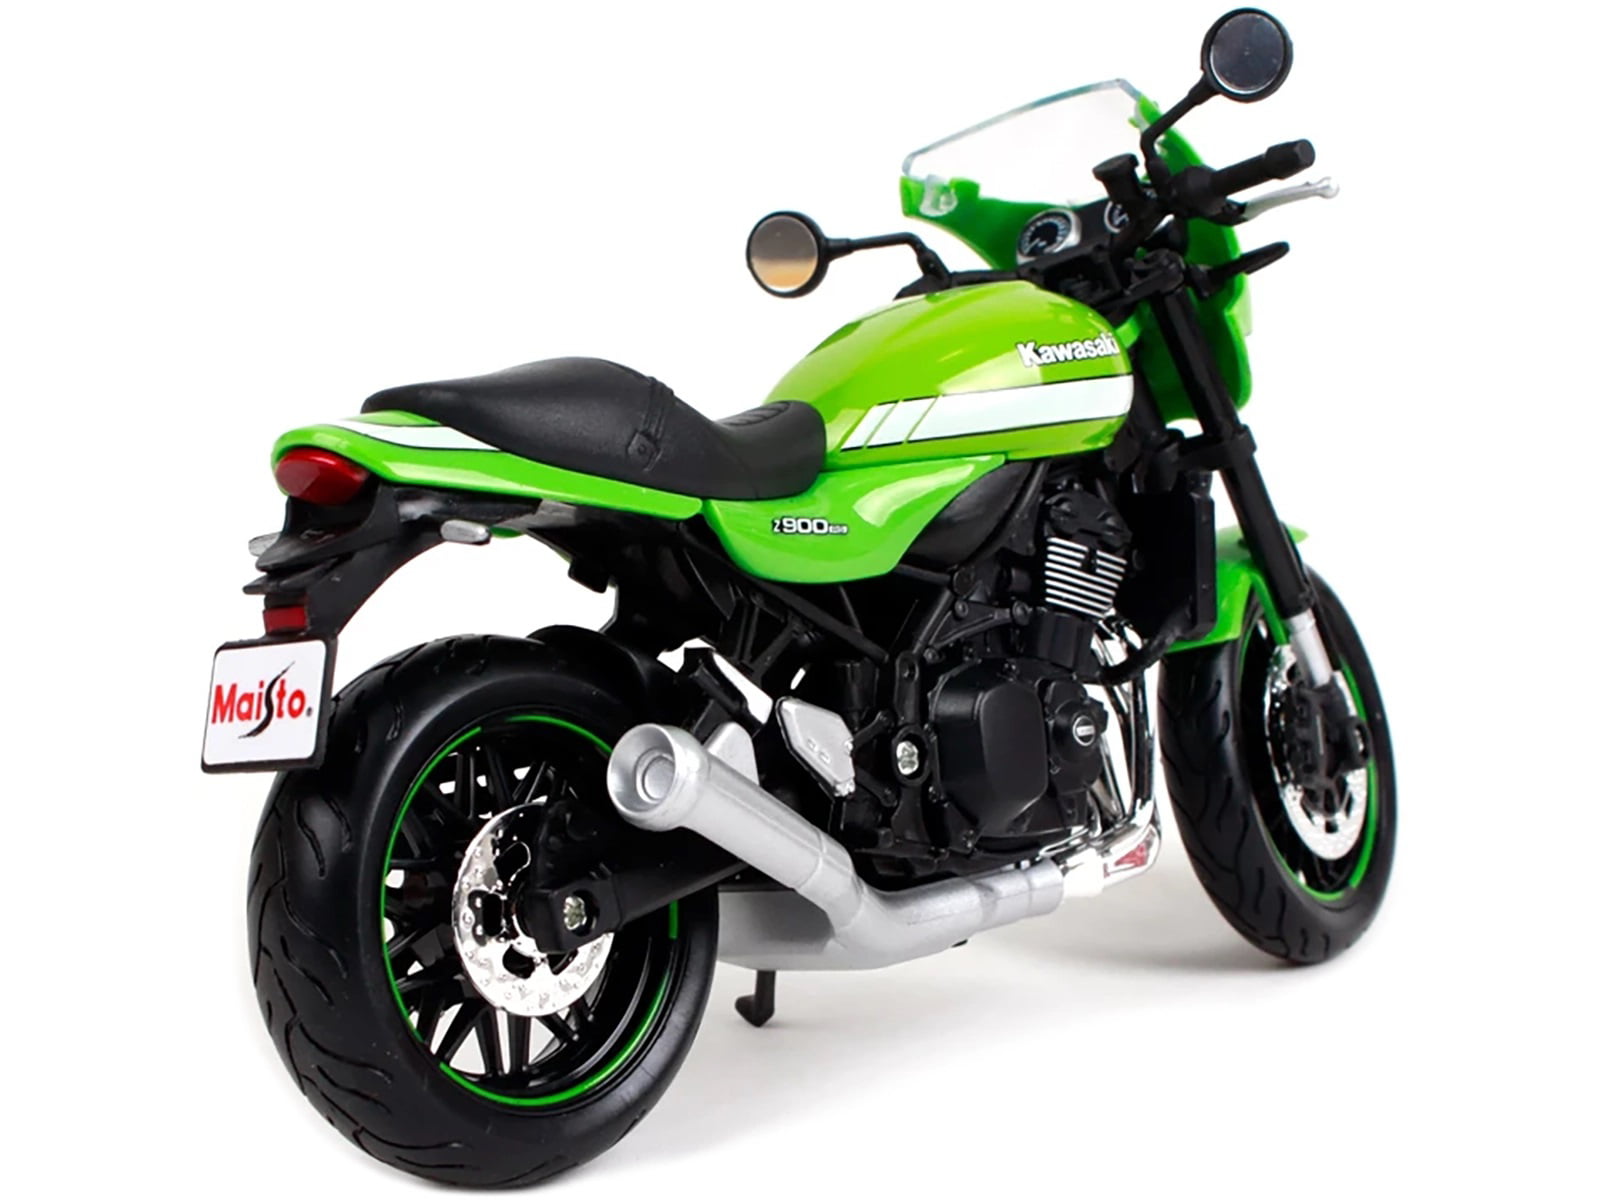 Maisto 1:12 Kawasaki Z900RS Cafe Motorcycle Bike Model Green 07503 